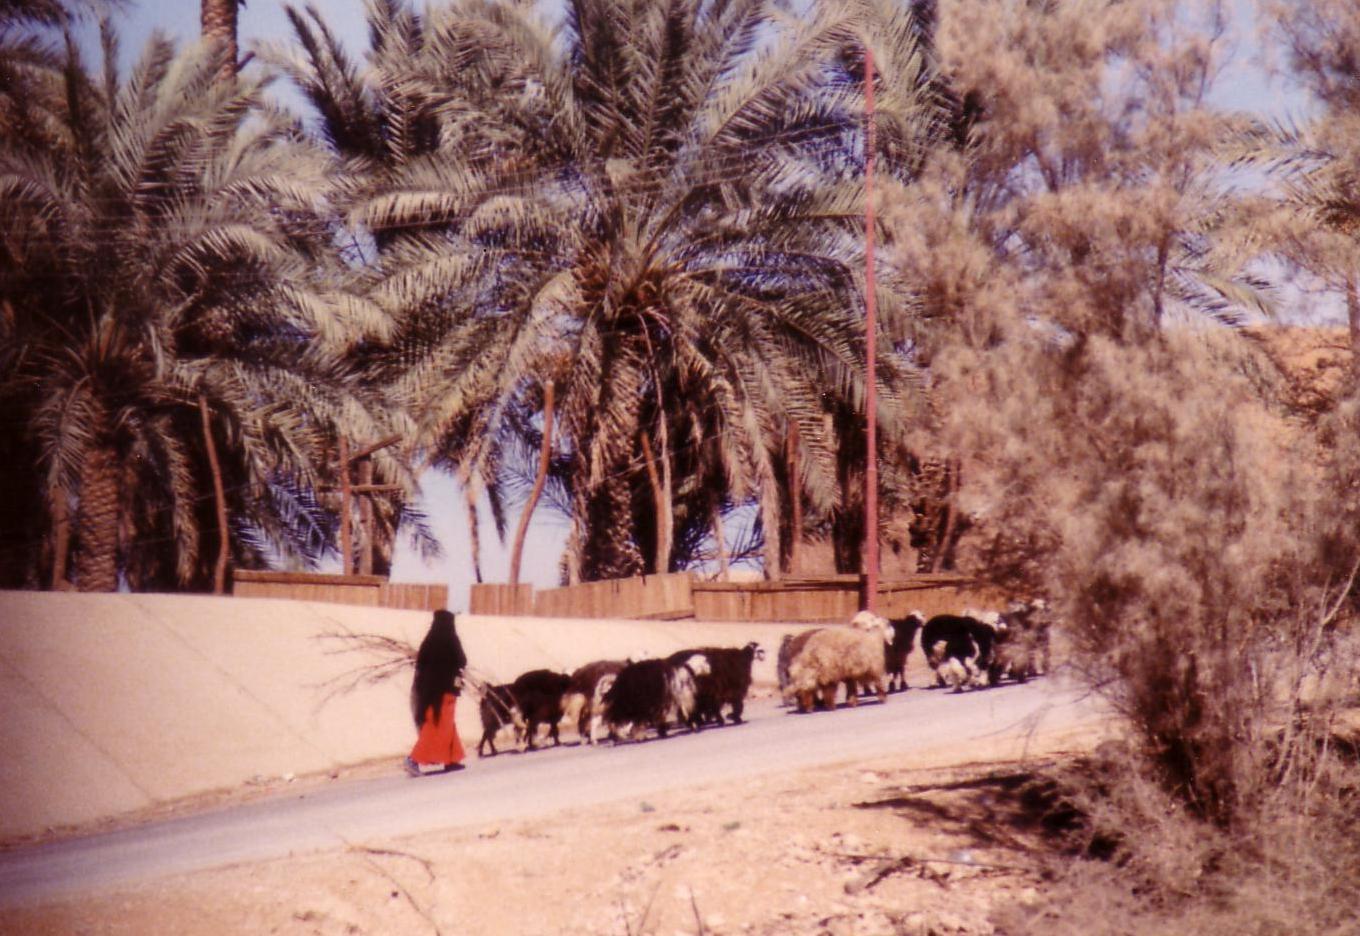 Shepherdess in Wadi Hanifa